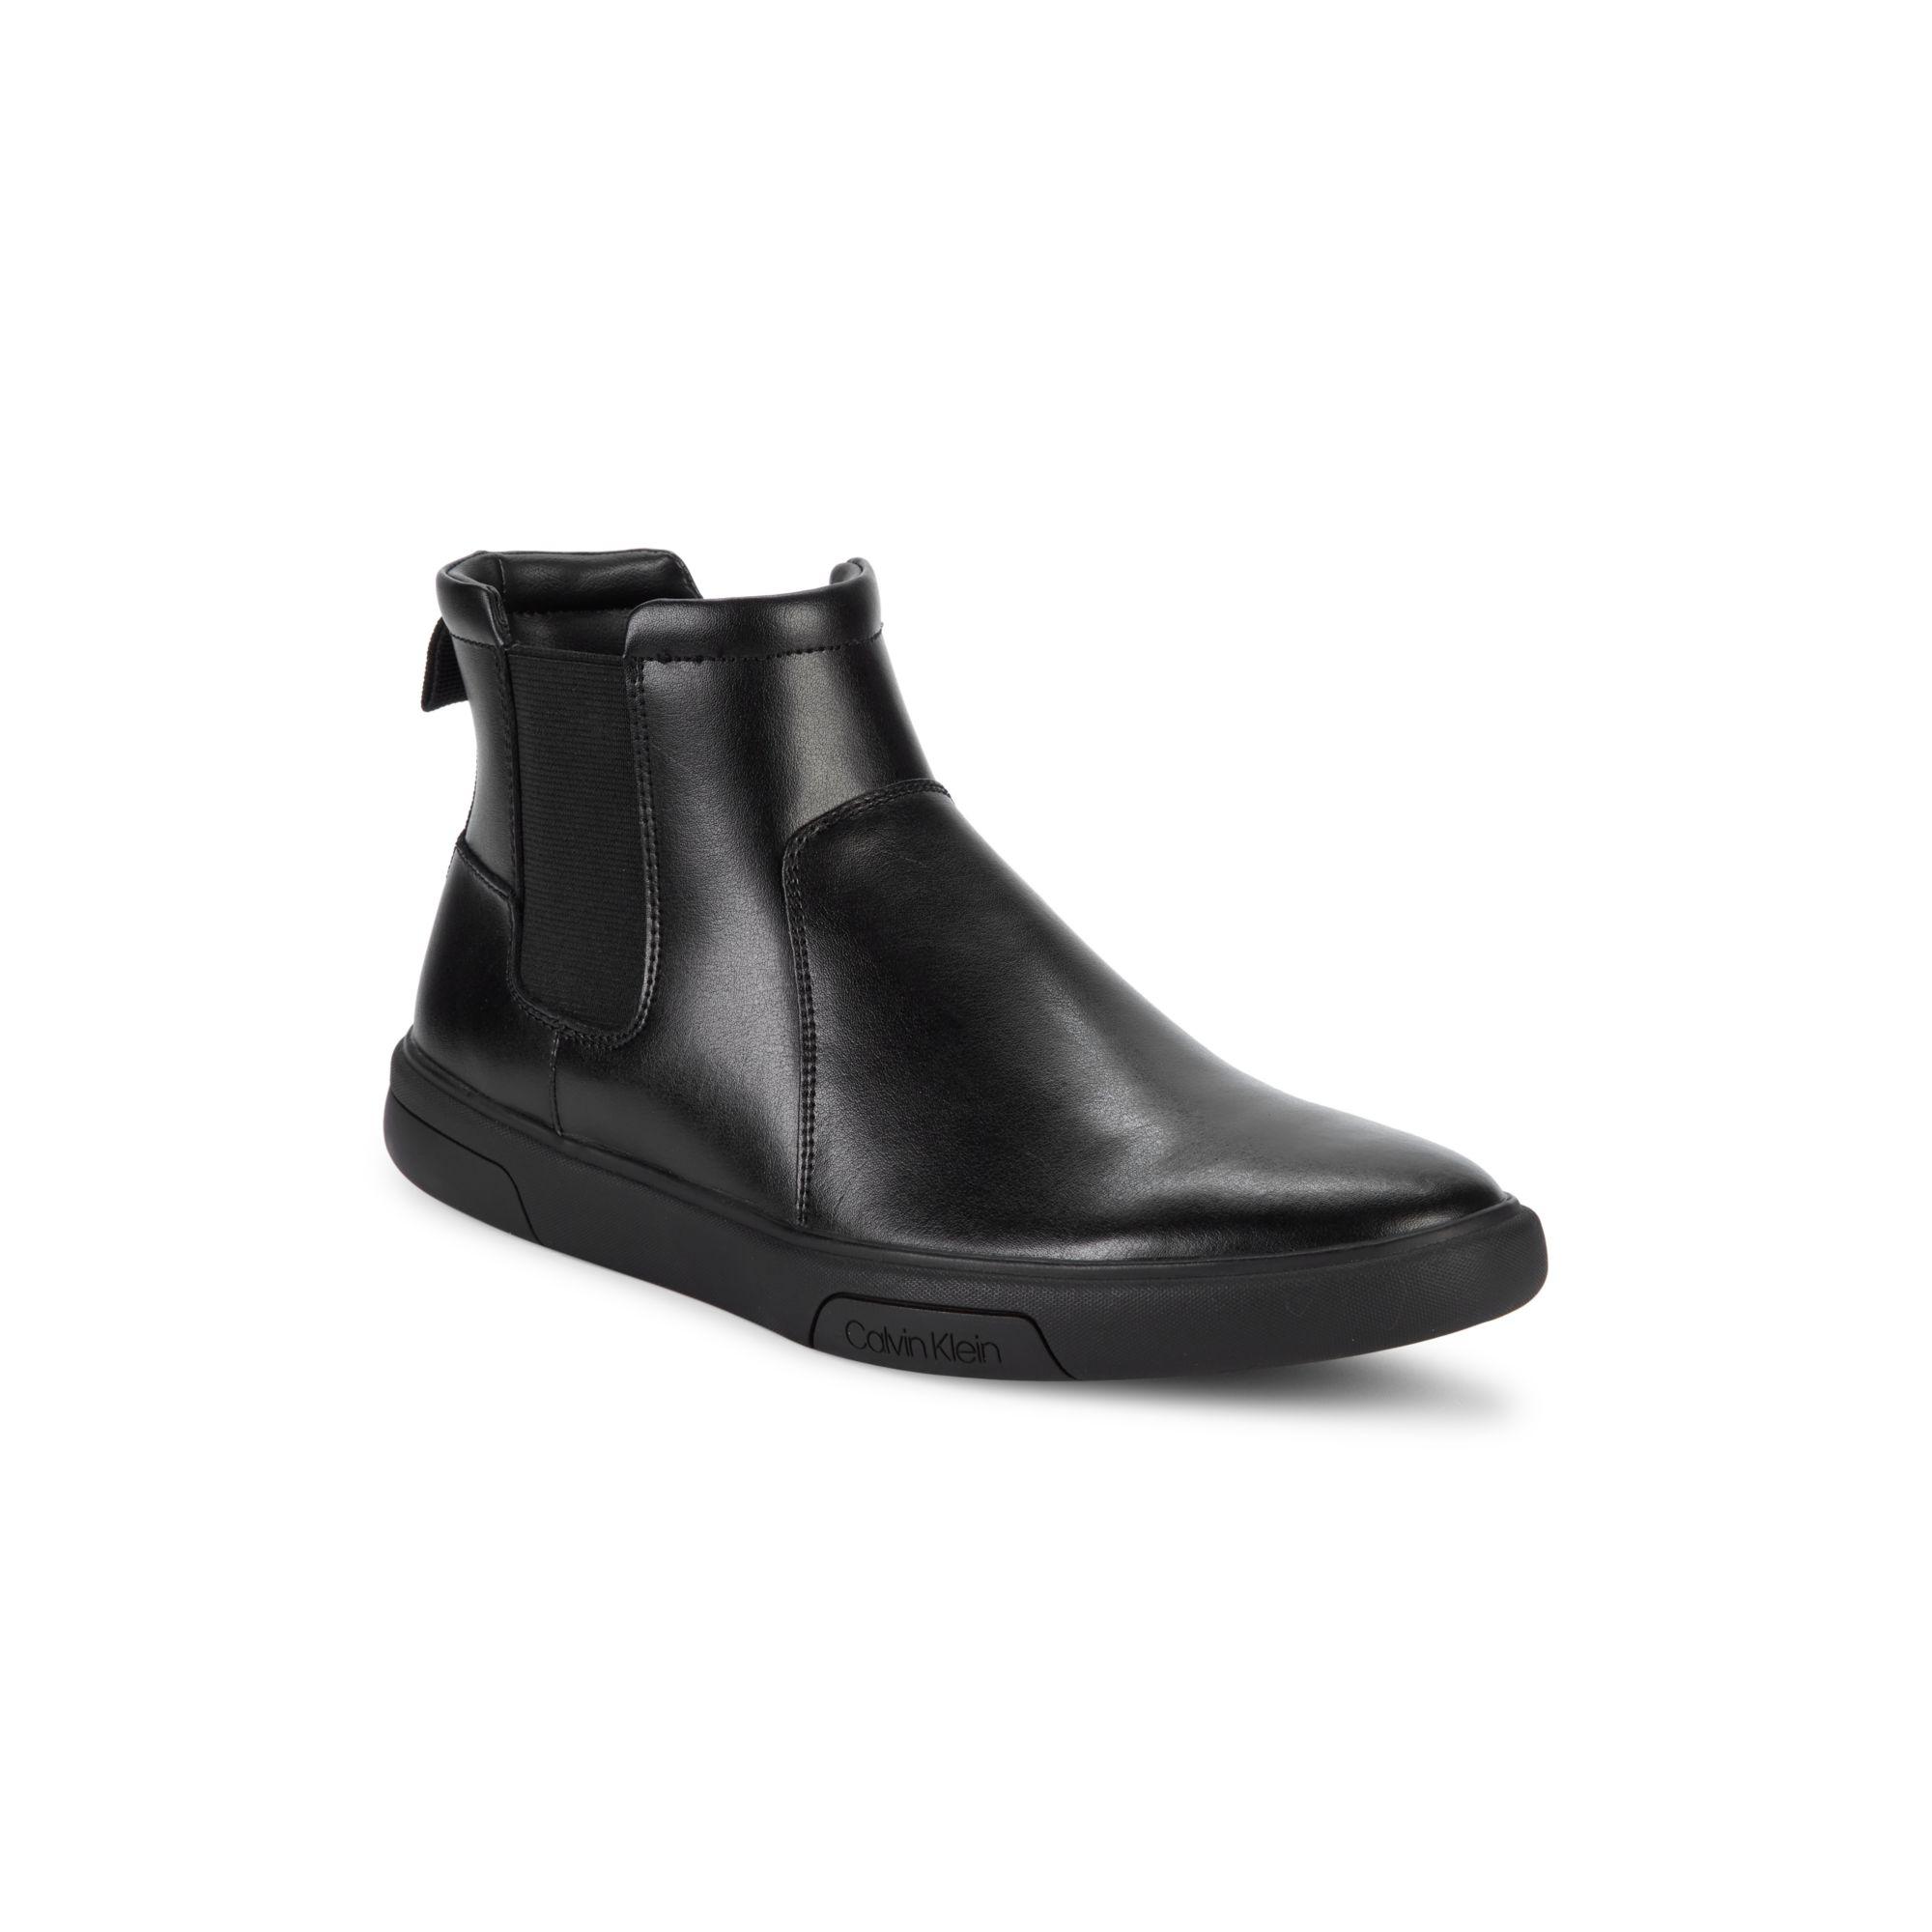 Calvin Klein Gideon Leather Chelsea Boots in Black for Men - Lyst